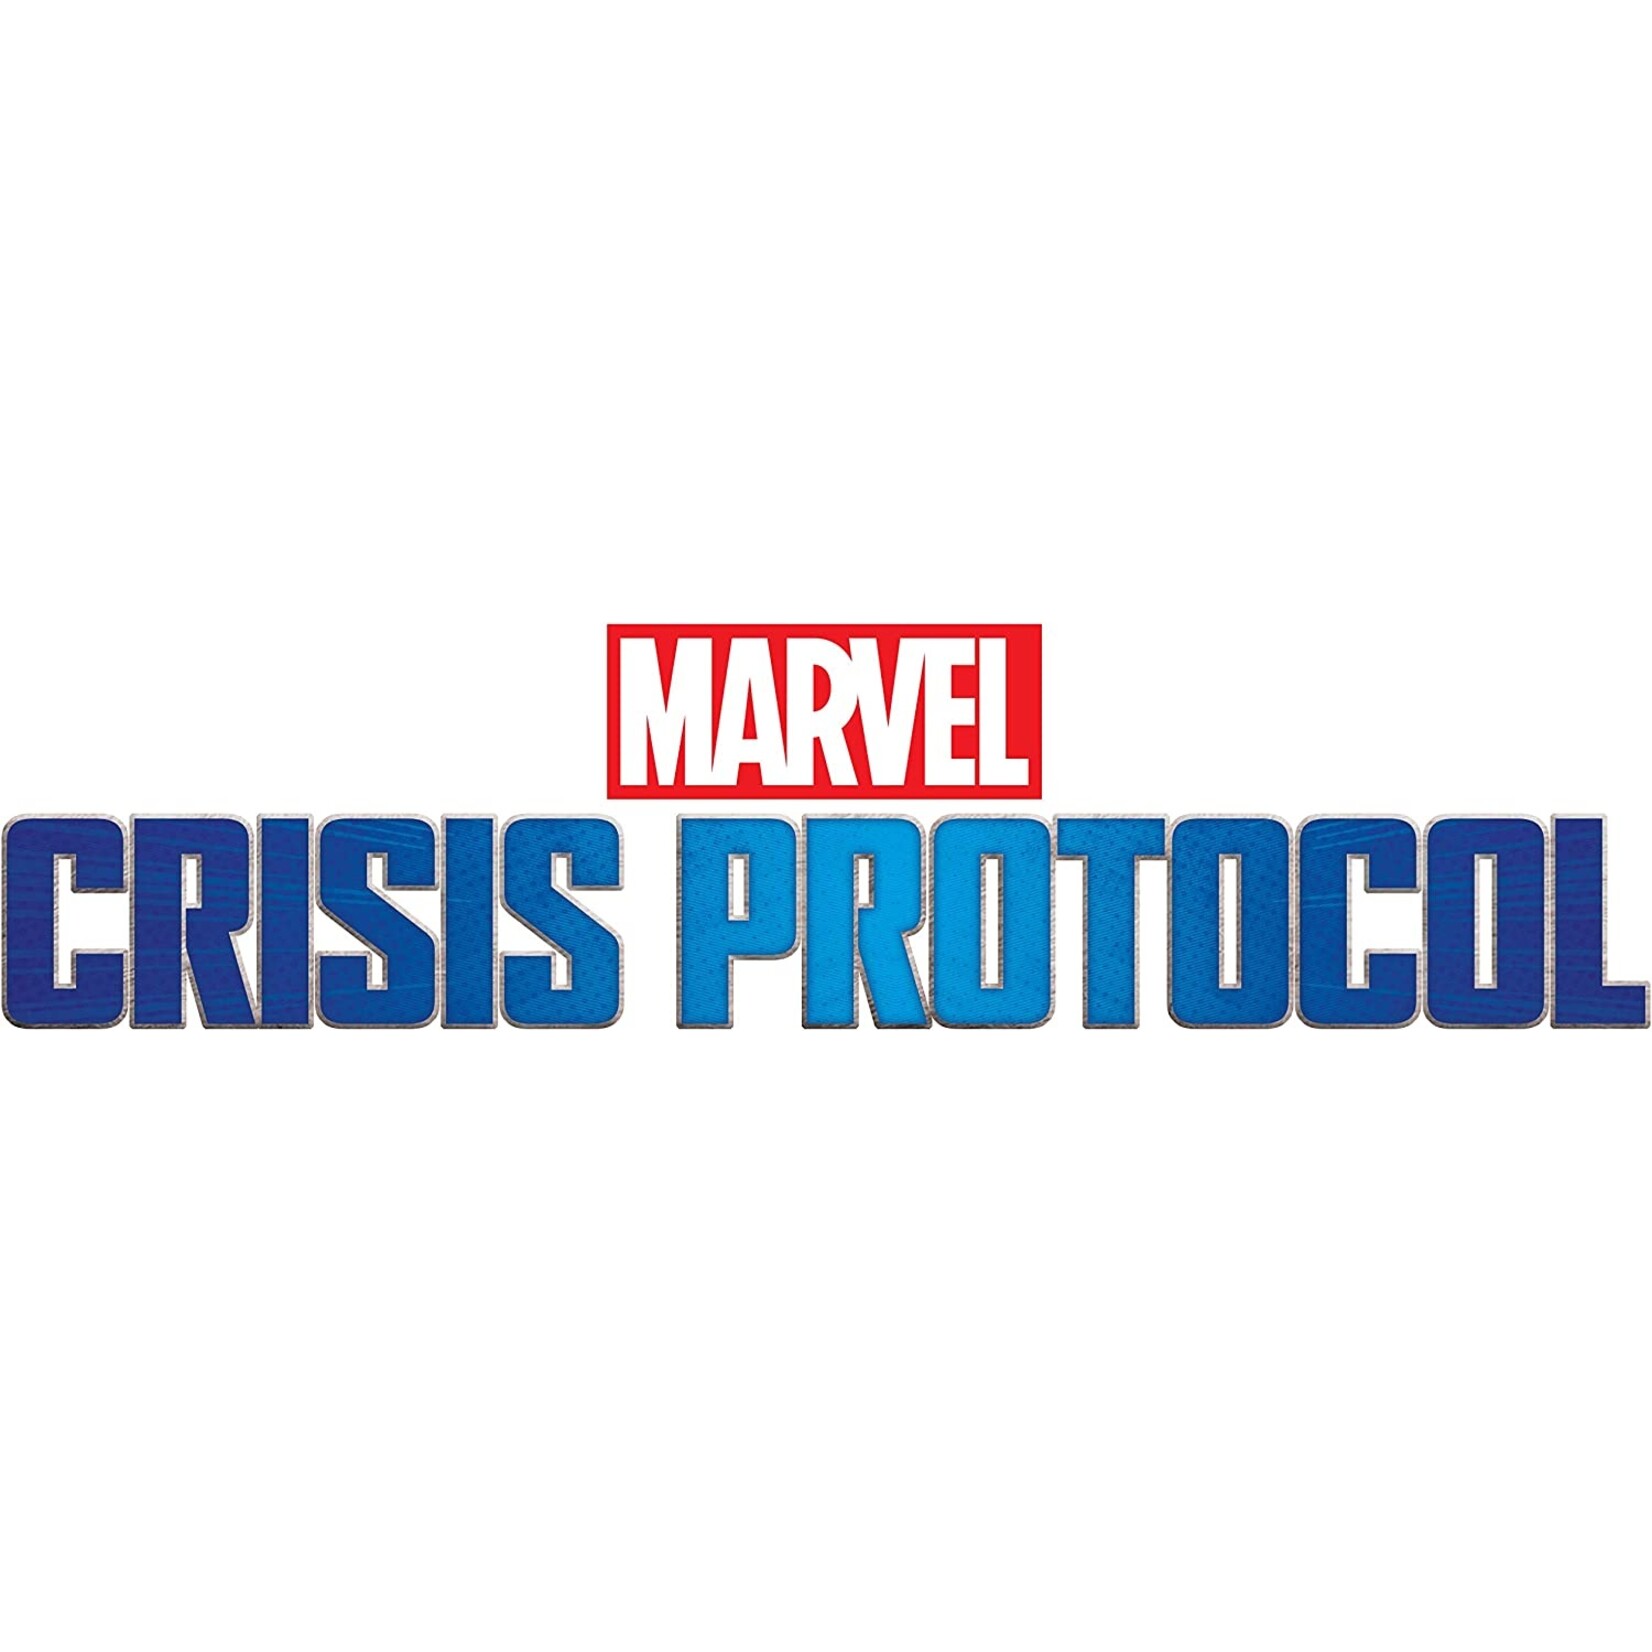 Atomic Mass Games Marvel: Crisis Protocol - Luke Cage & Iron Fist